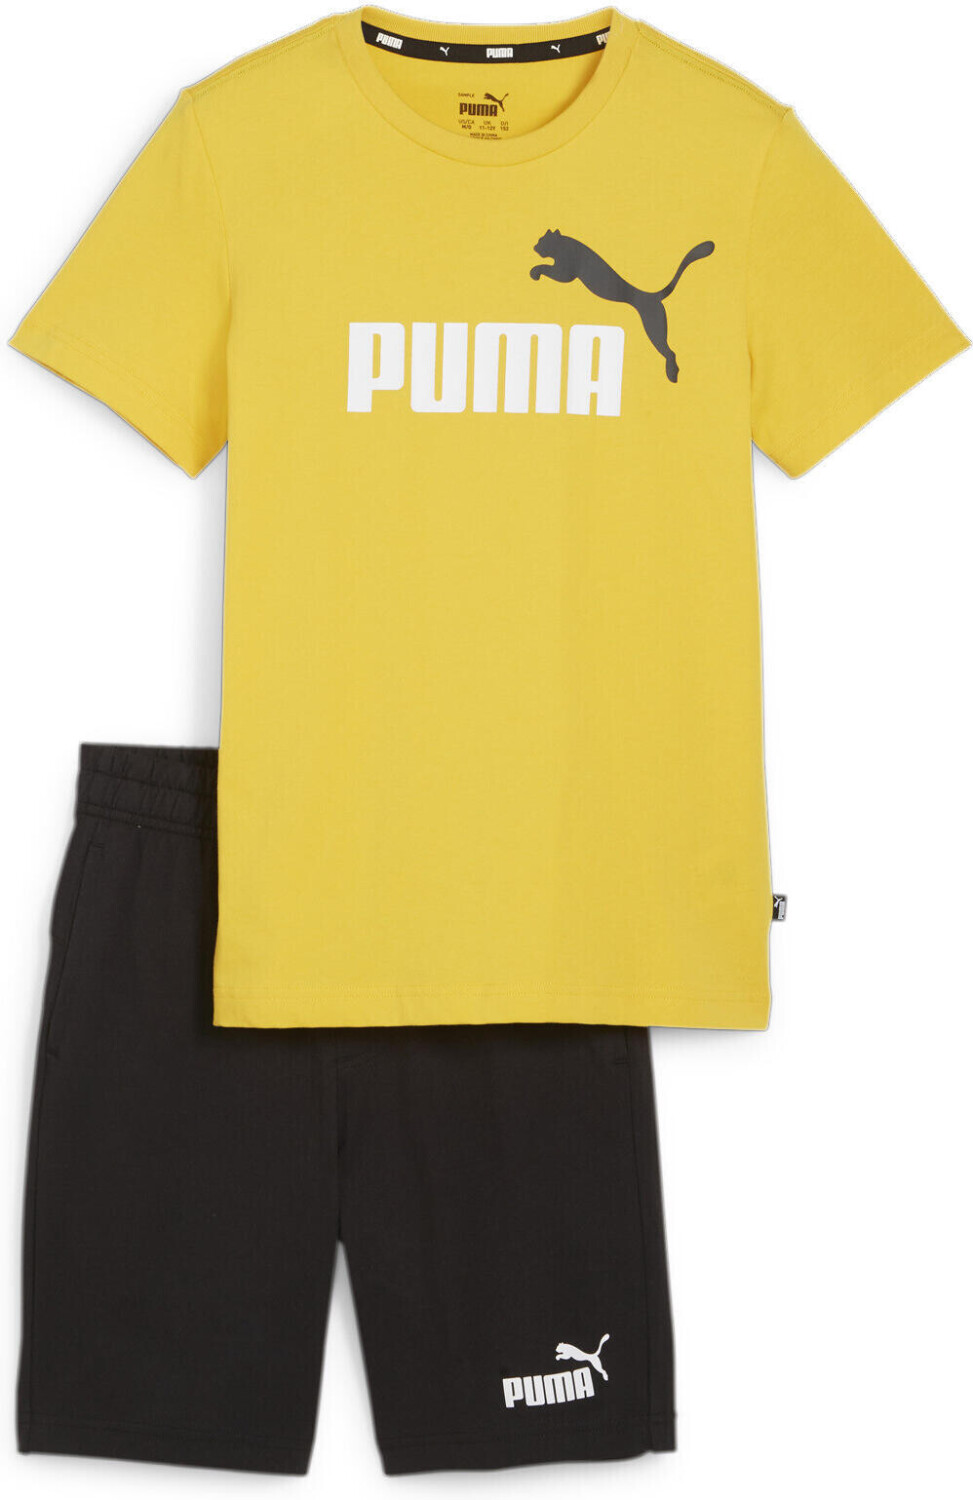 Short 25,99 | ab yellow bei B (847310) Set Jersey € Preisvergleich sizzle Puma